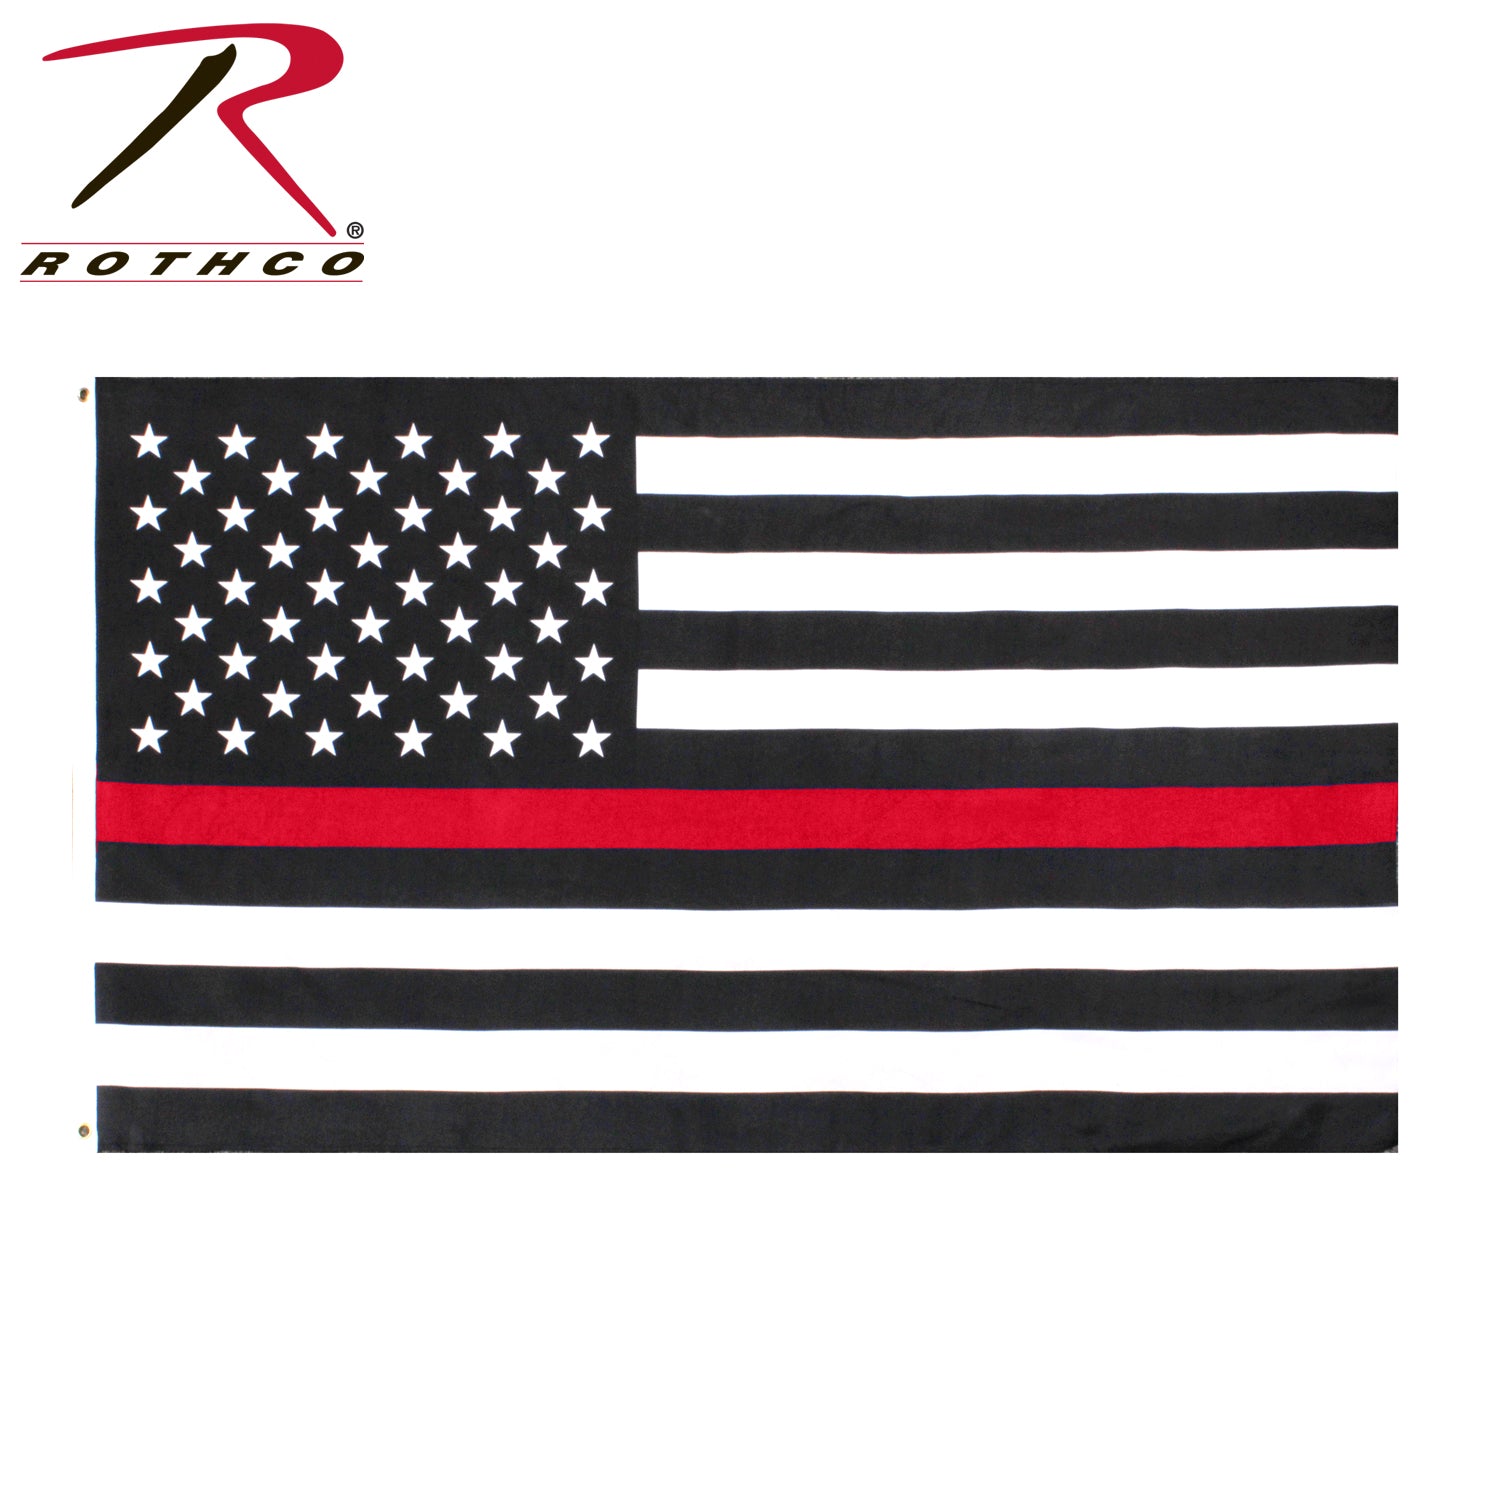 Rothco Thin Red Line US Flag 3x5